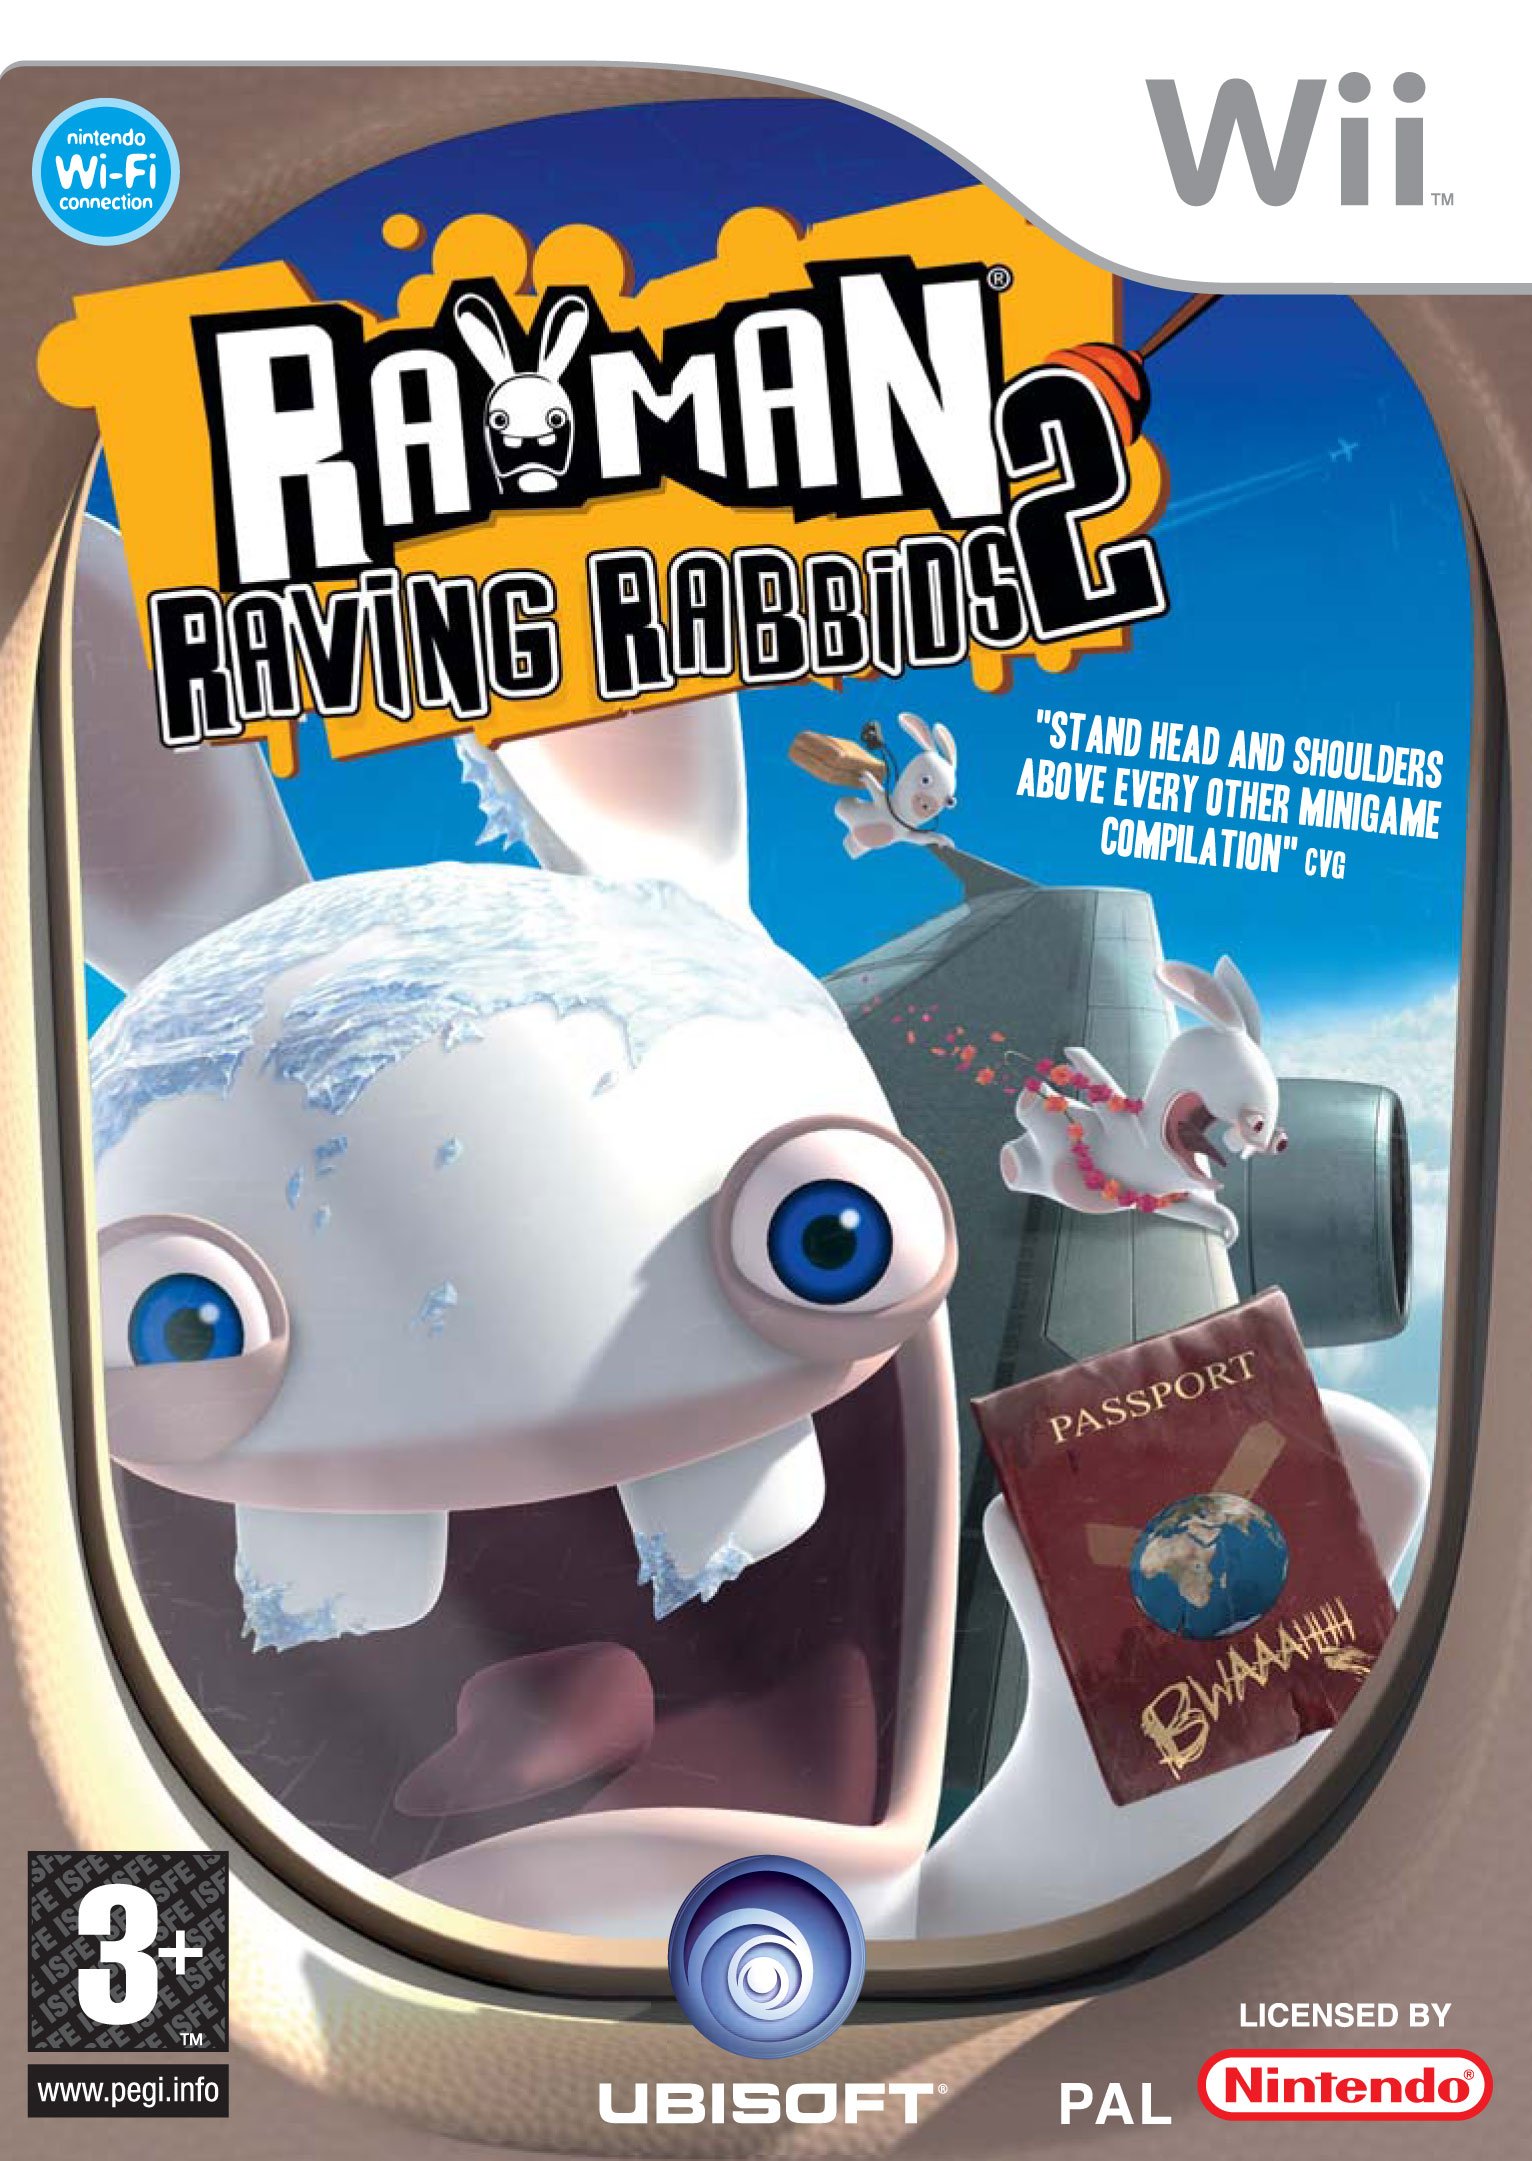 rayman rabbids.com